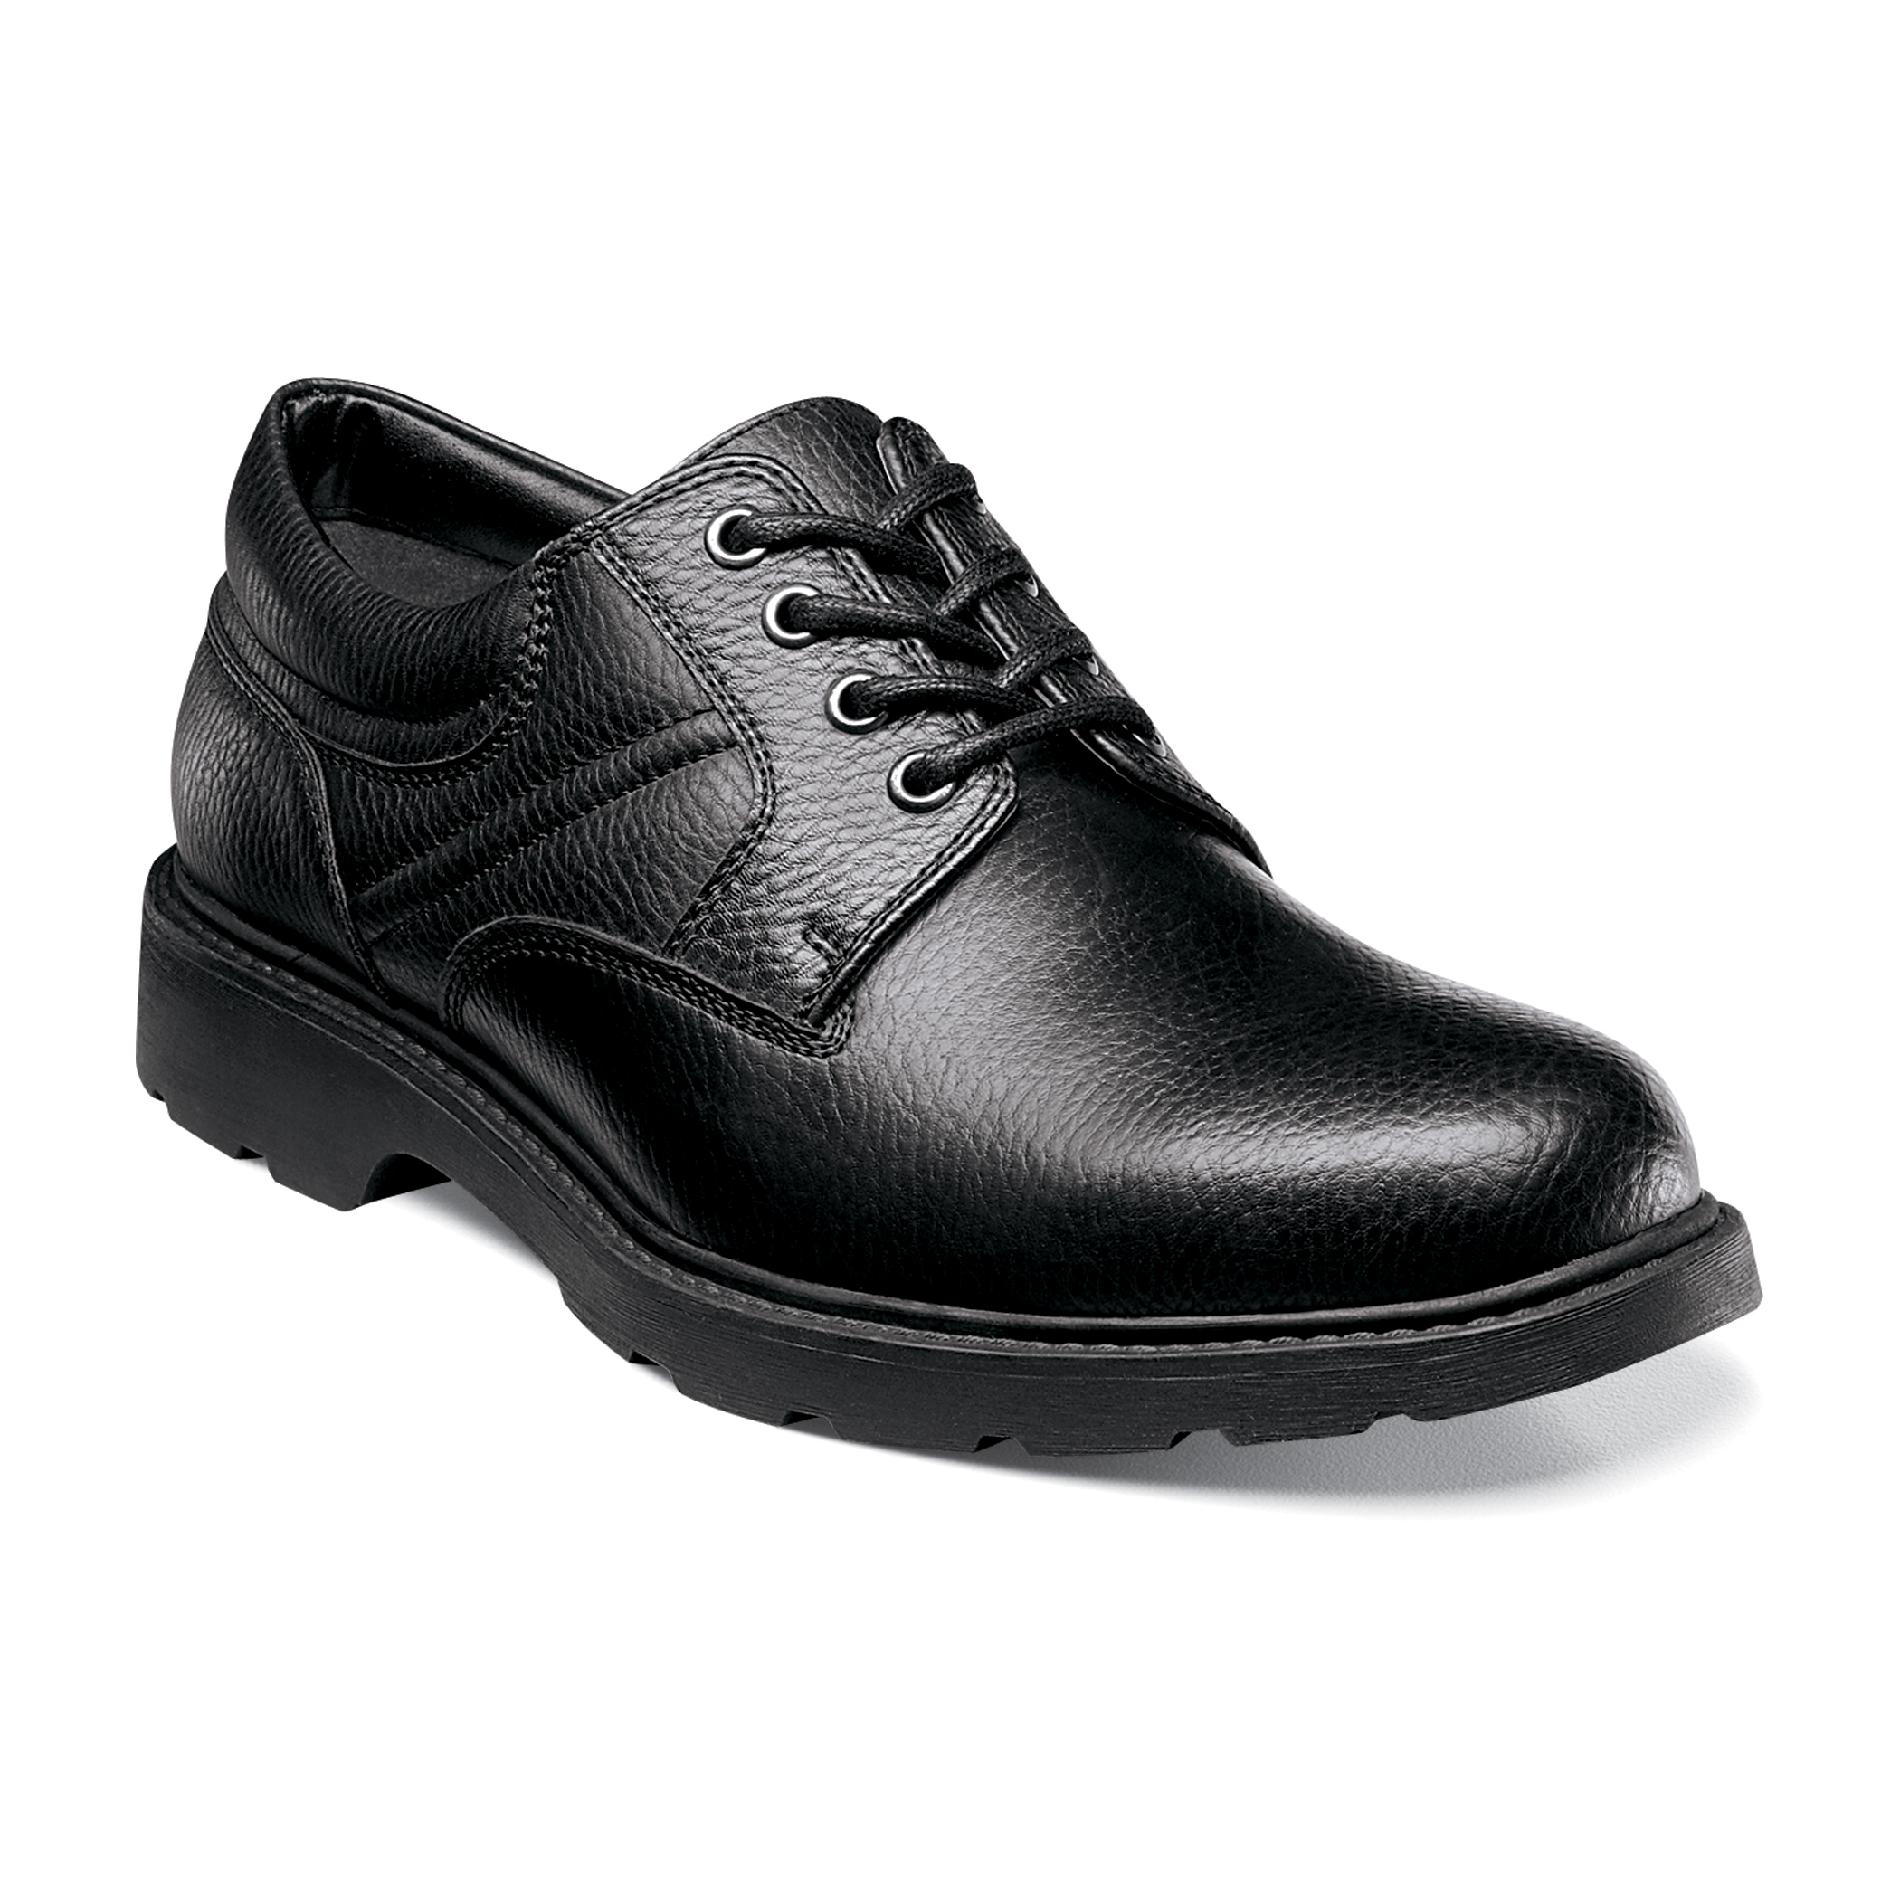 Nunn Bush Men's Casual Shoe Grafton Wide Avail - Black